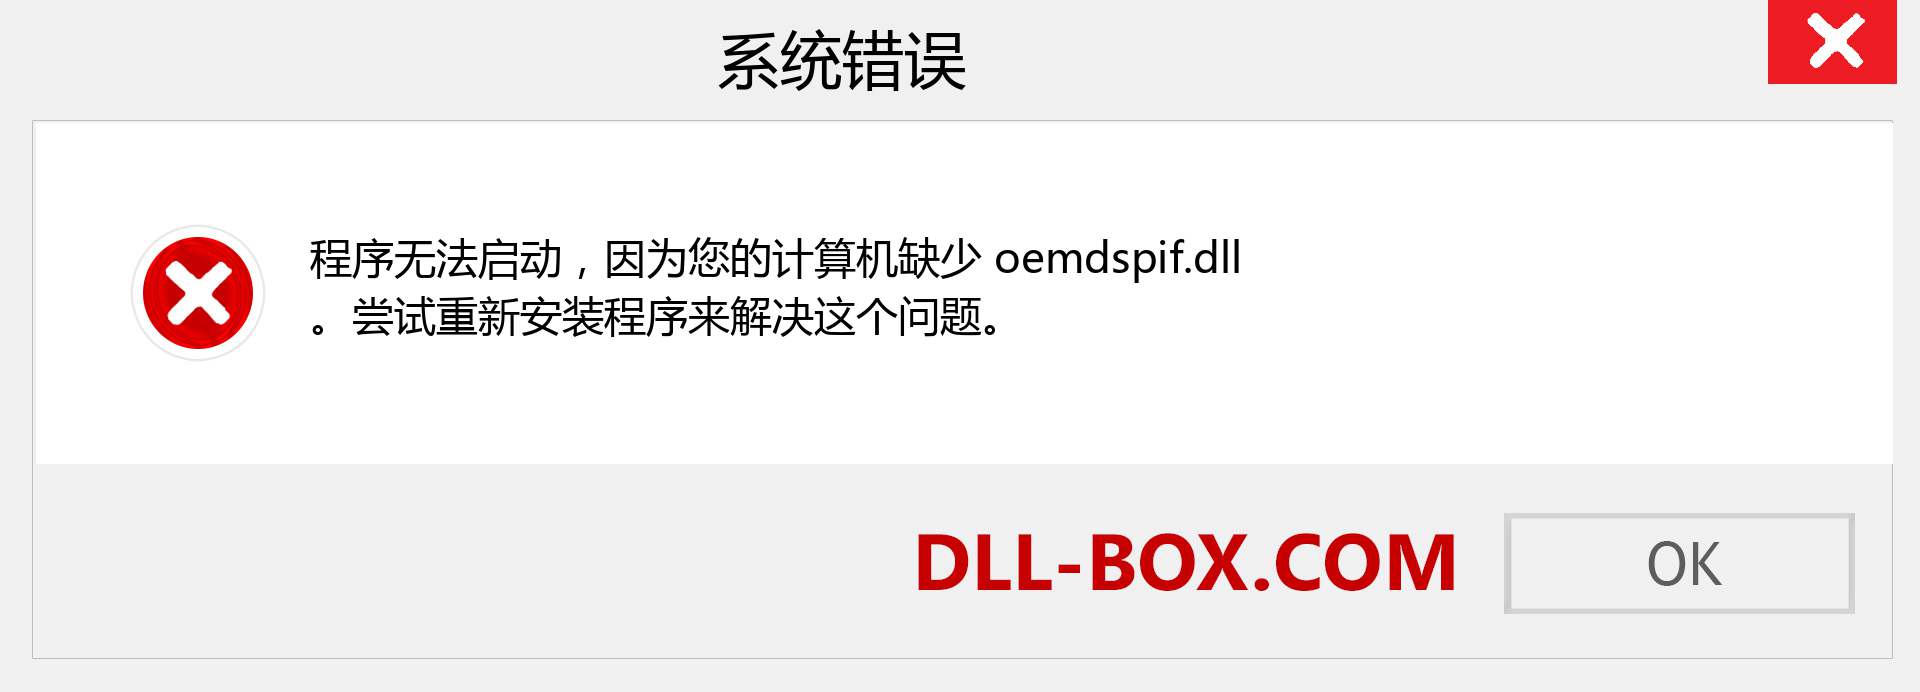 oemdspif.dll 文件丢失？。 适用于 Windows 7、8、10 的下载 - 修复 Windows、照片、图像上的 oemdspif dll 丢失错误